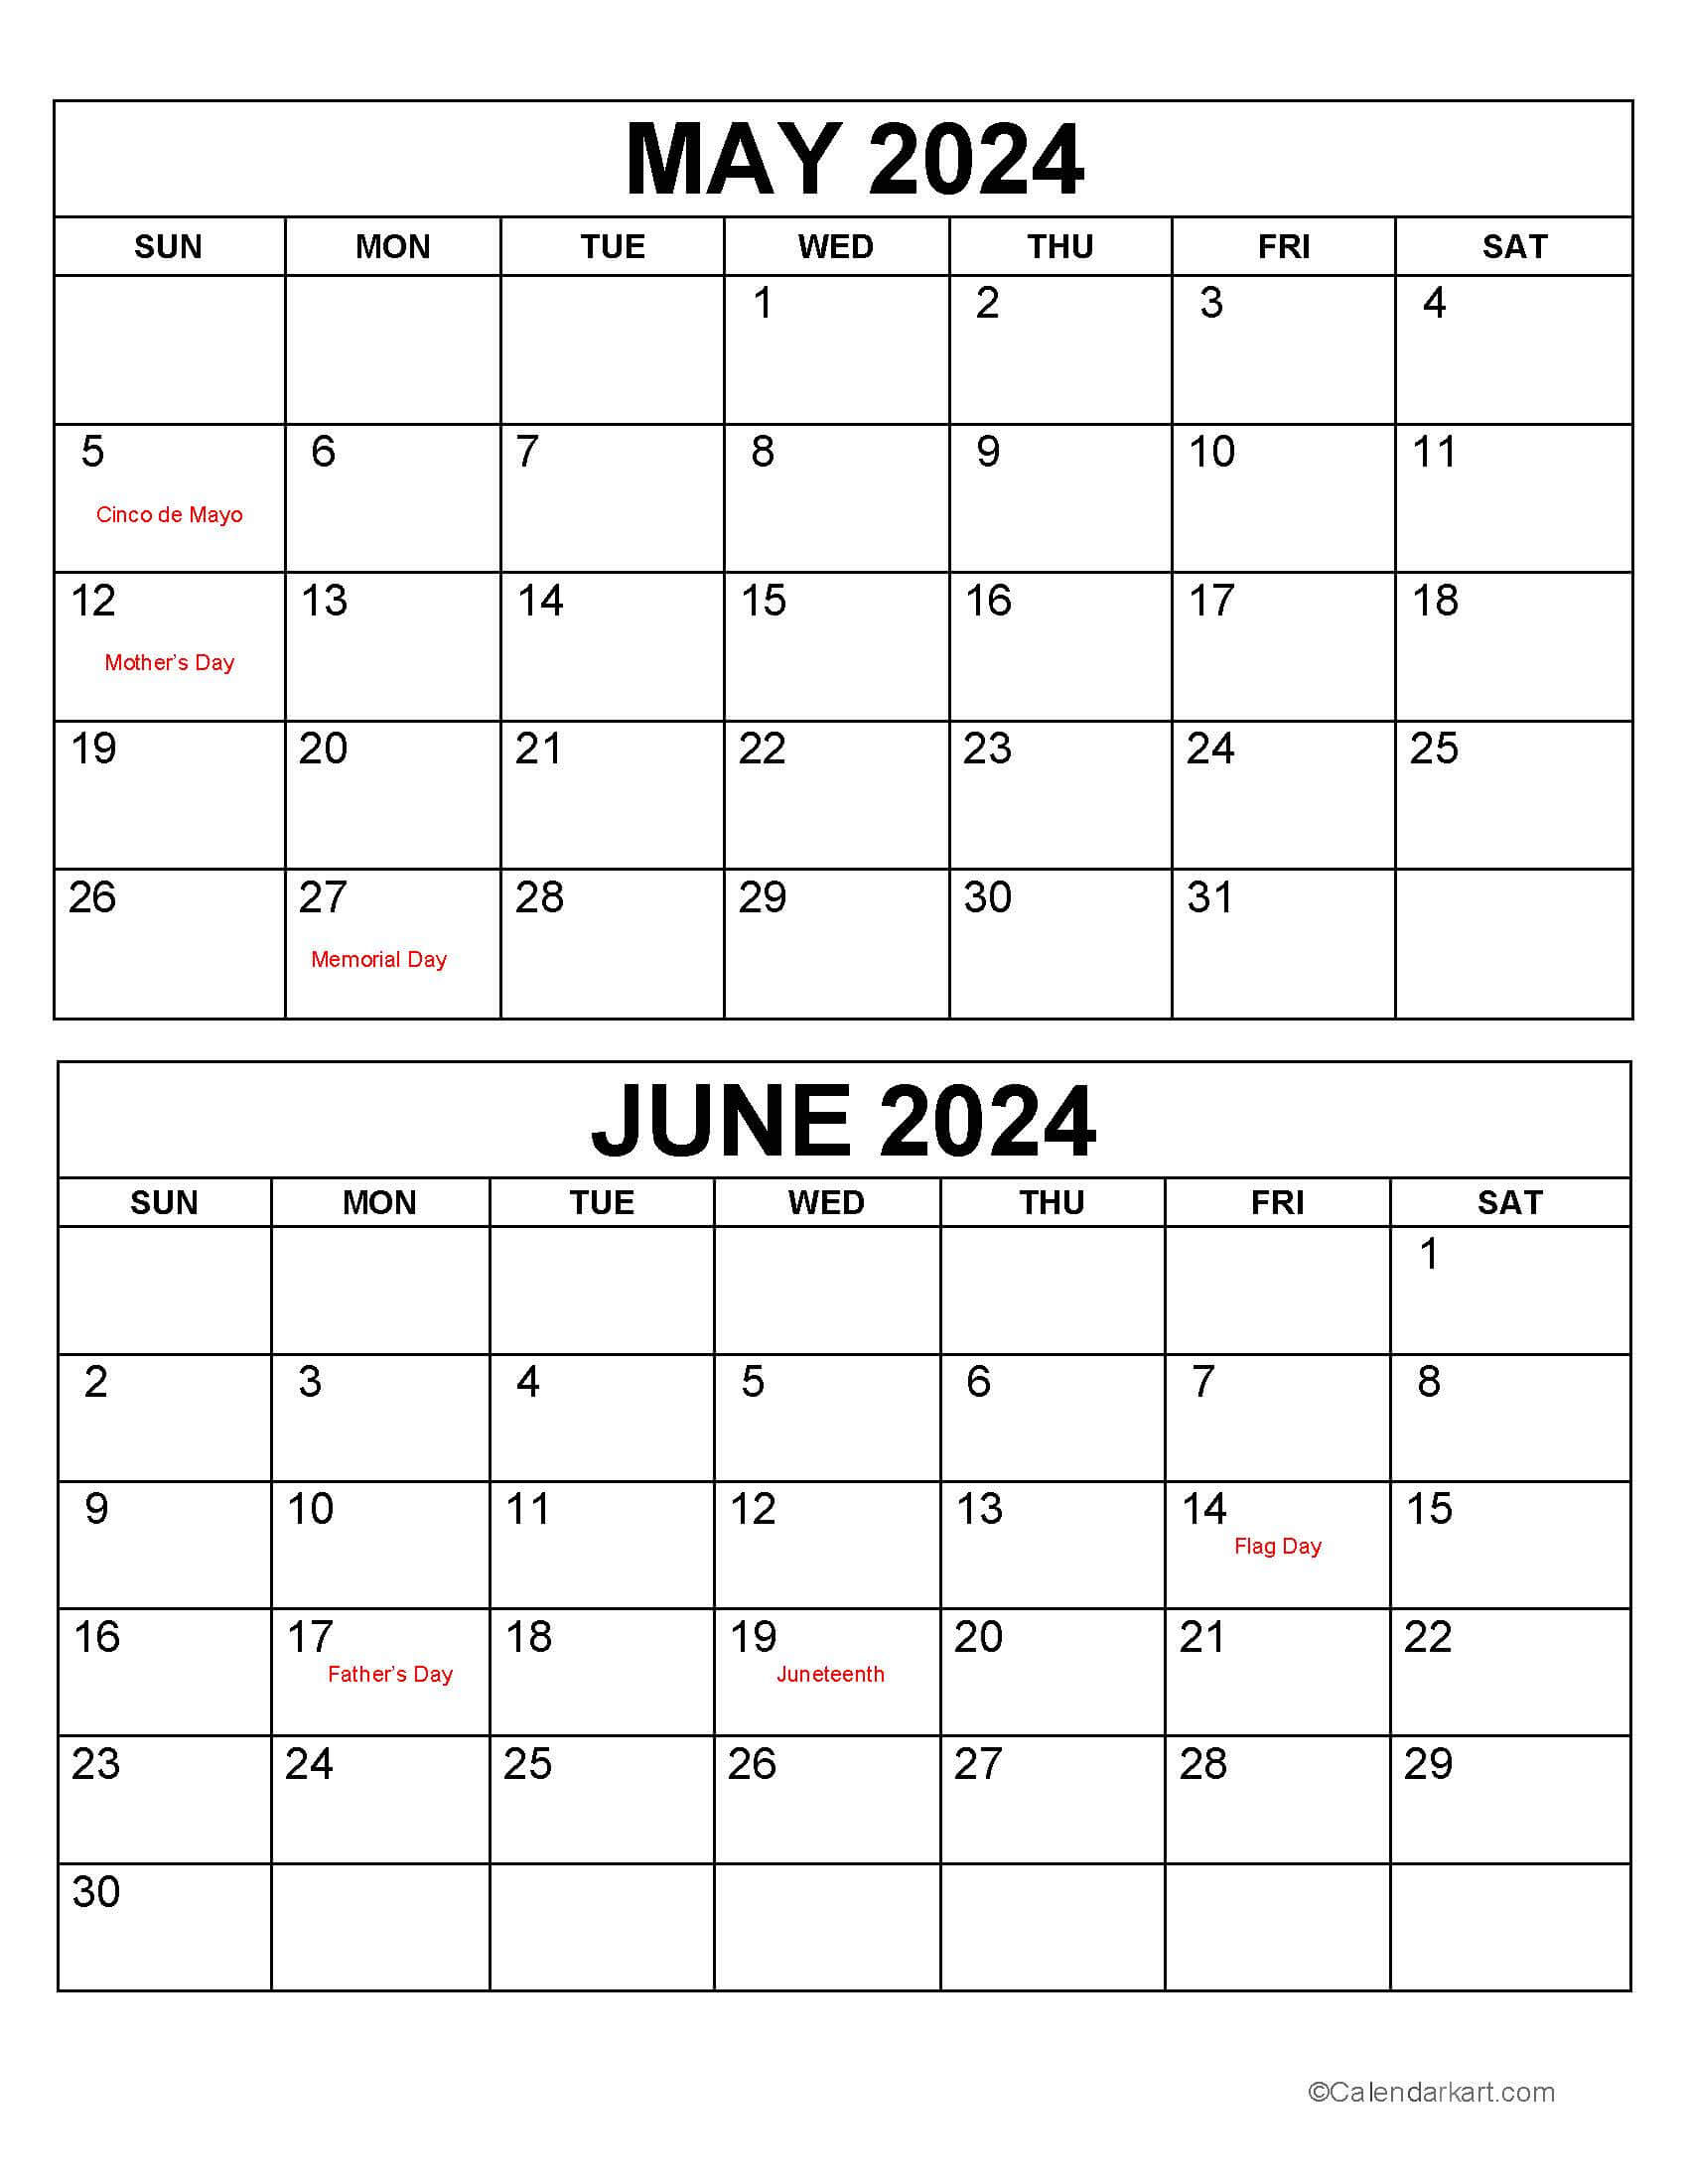 May June 2024 Calendars (3Rd Bi-Monthly) - Calendarkart throughout Calendar 2024 May And June